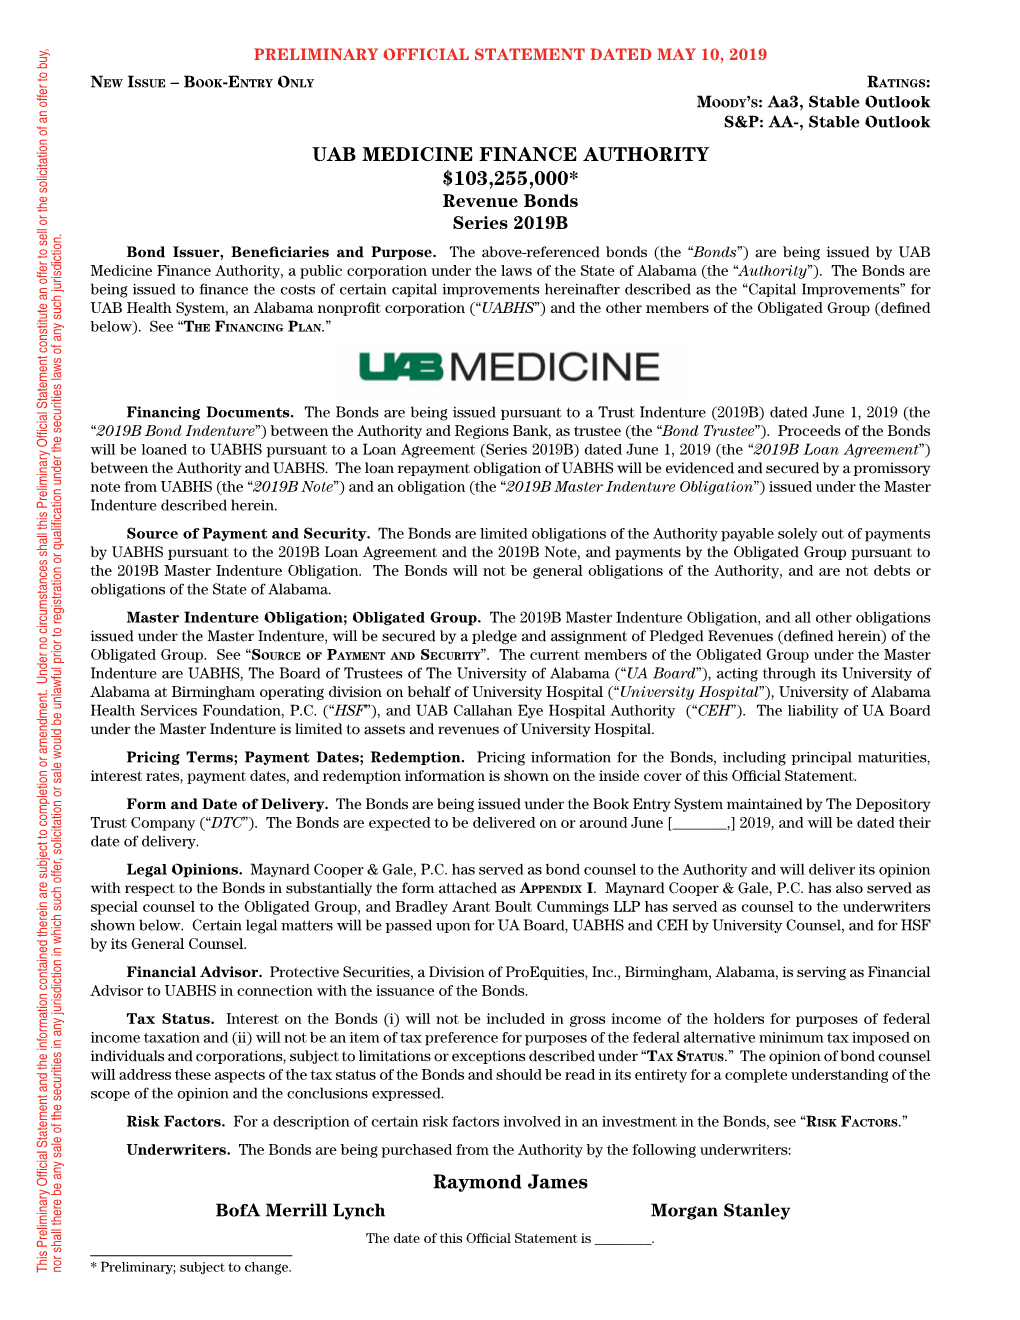 UAB Medicine Finance Authority Revenue Bonds Series 2019B